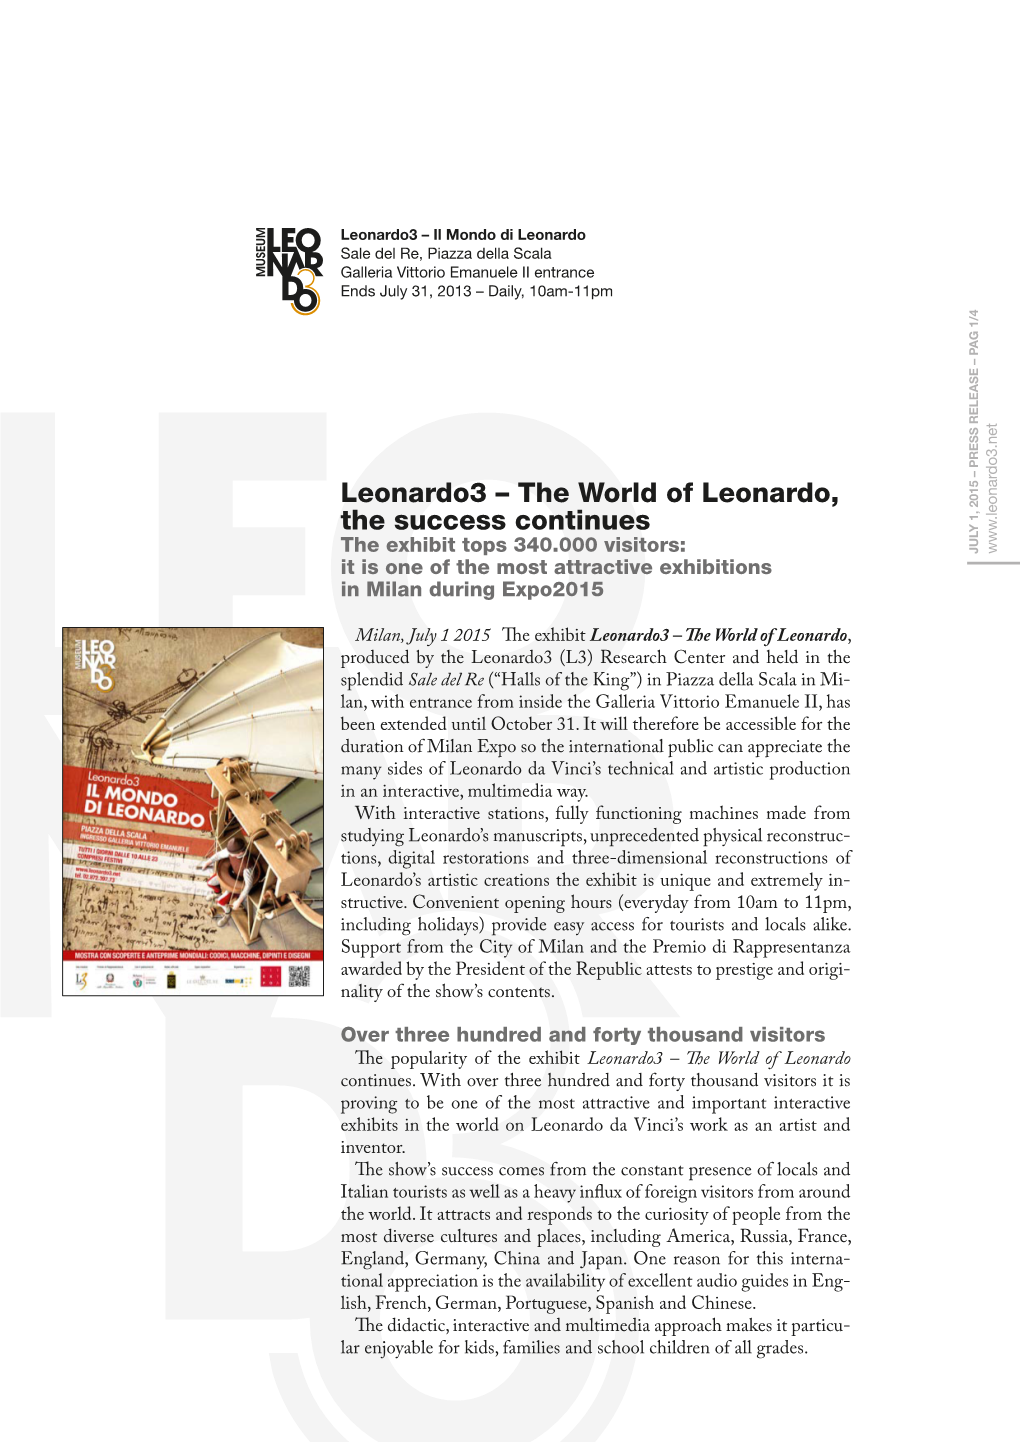 The World of Leonardo, the Success Continues